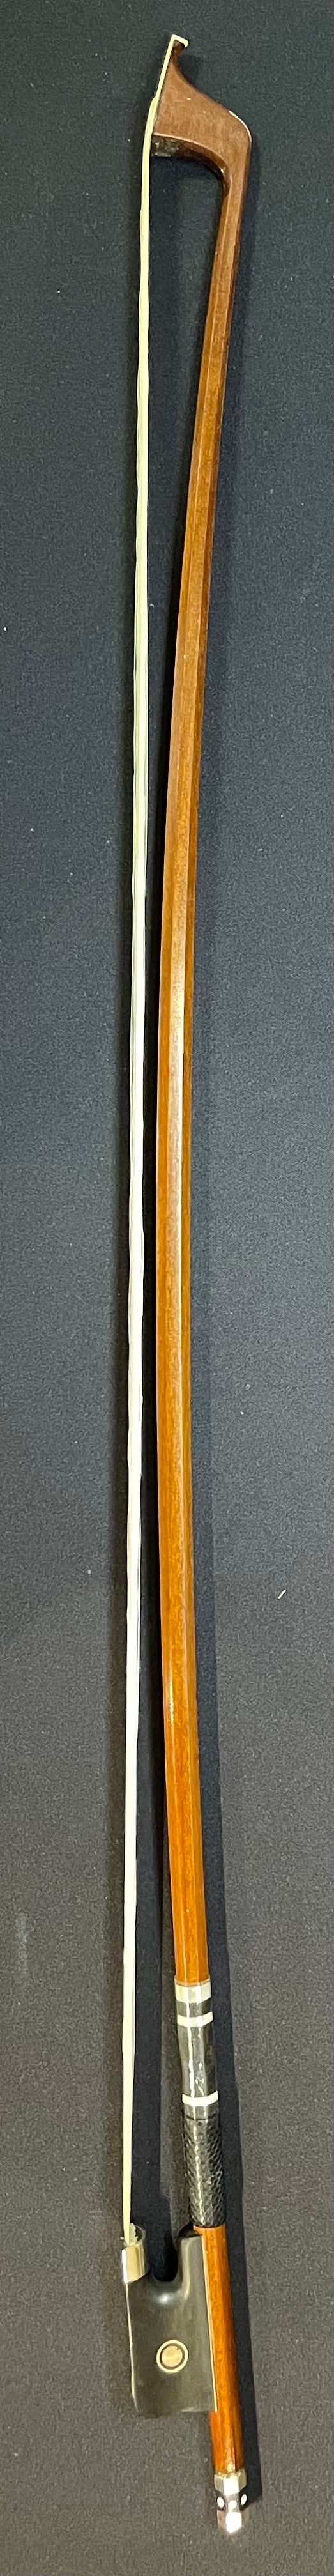 4/4 Cello Bow - TZXS Wood Model